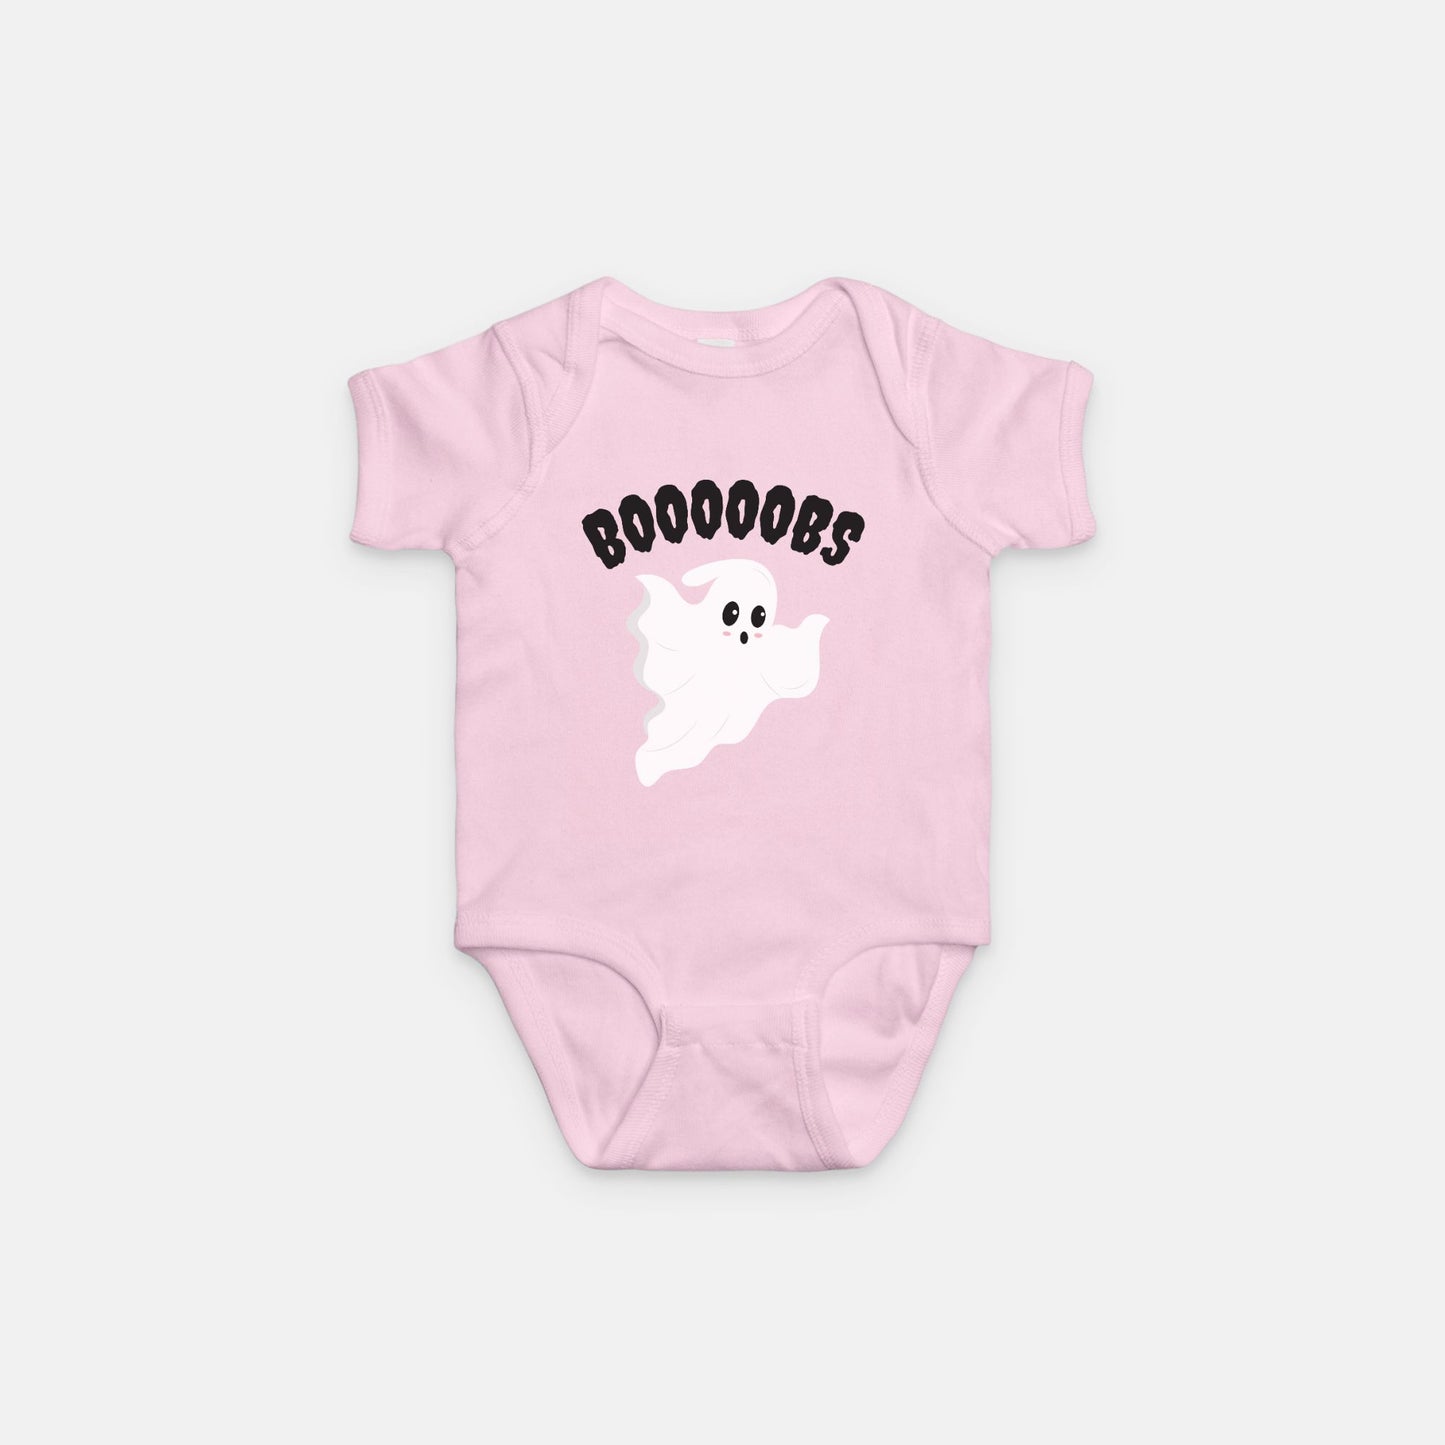 BOOBS Funny Breastfeeding Shirt for Newborn - Halloween Bodysuit for Baby